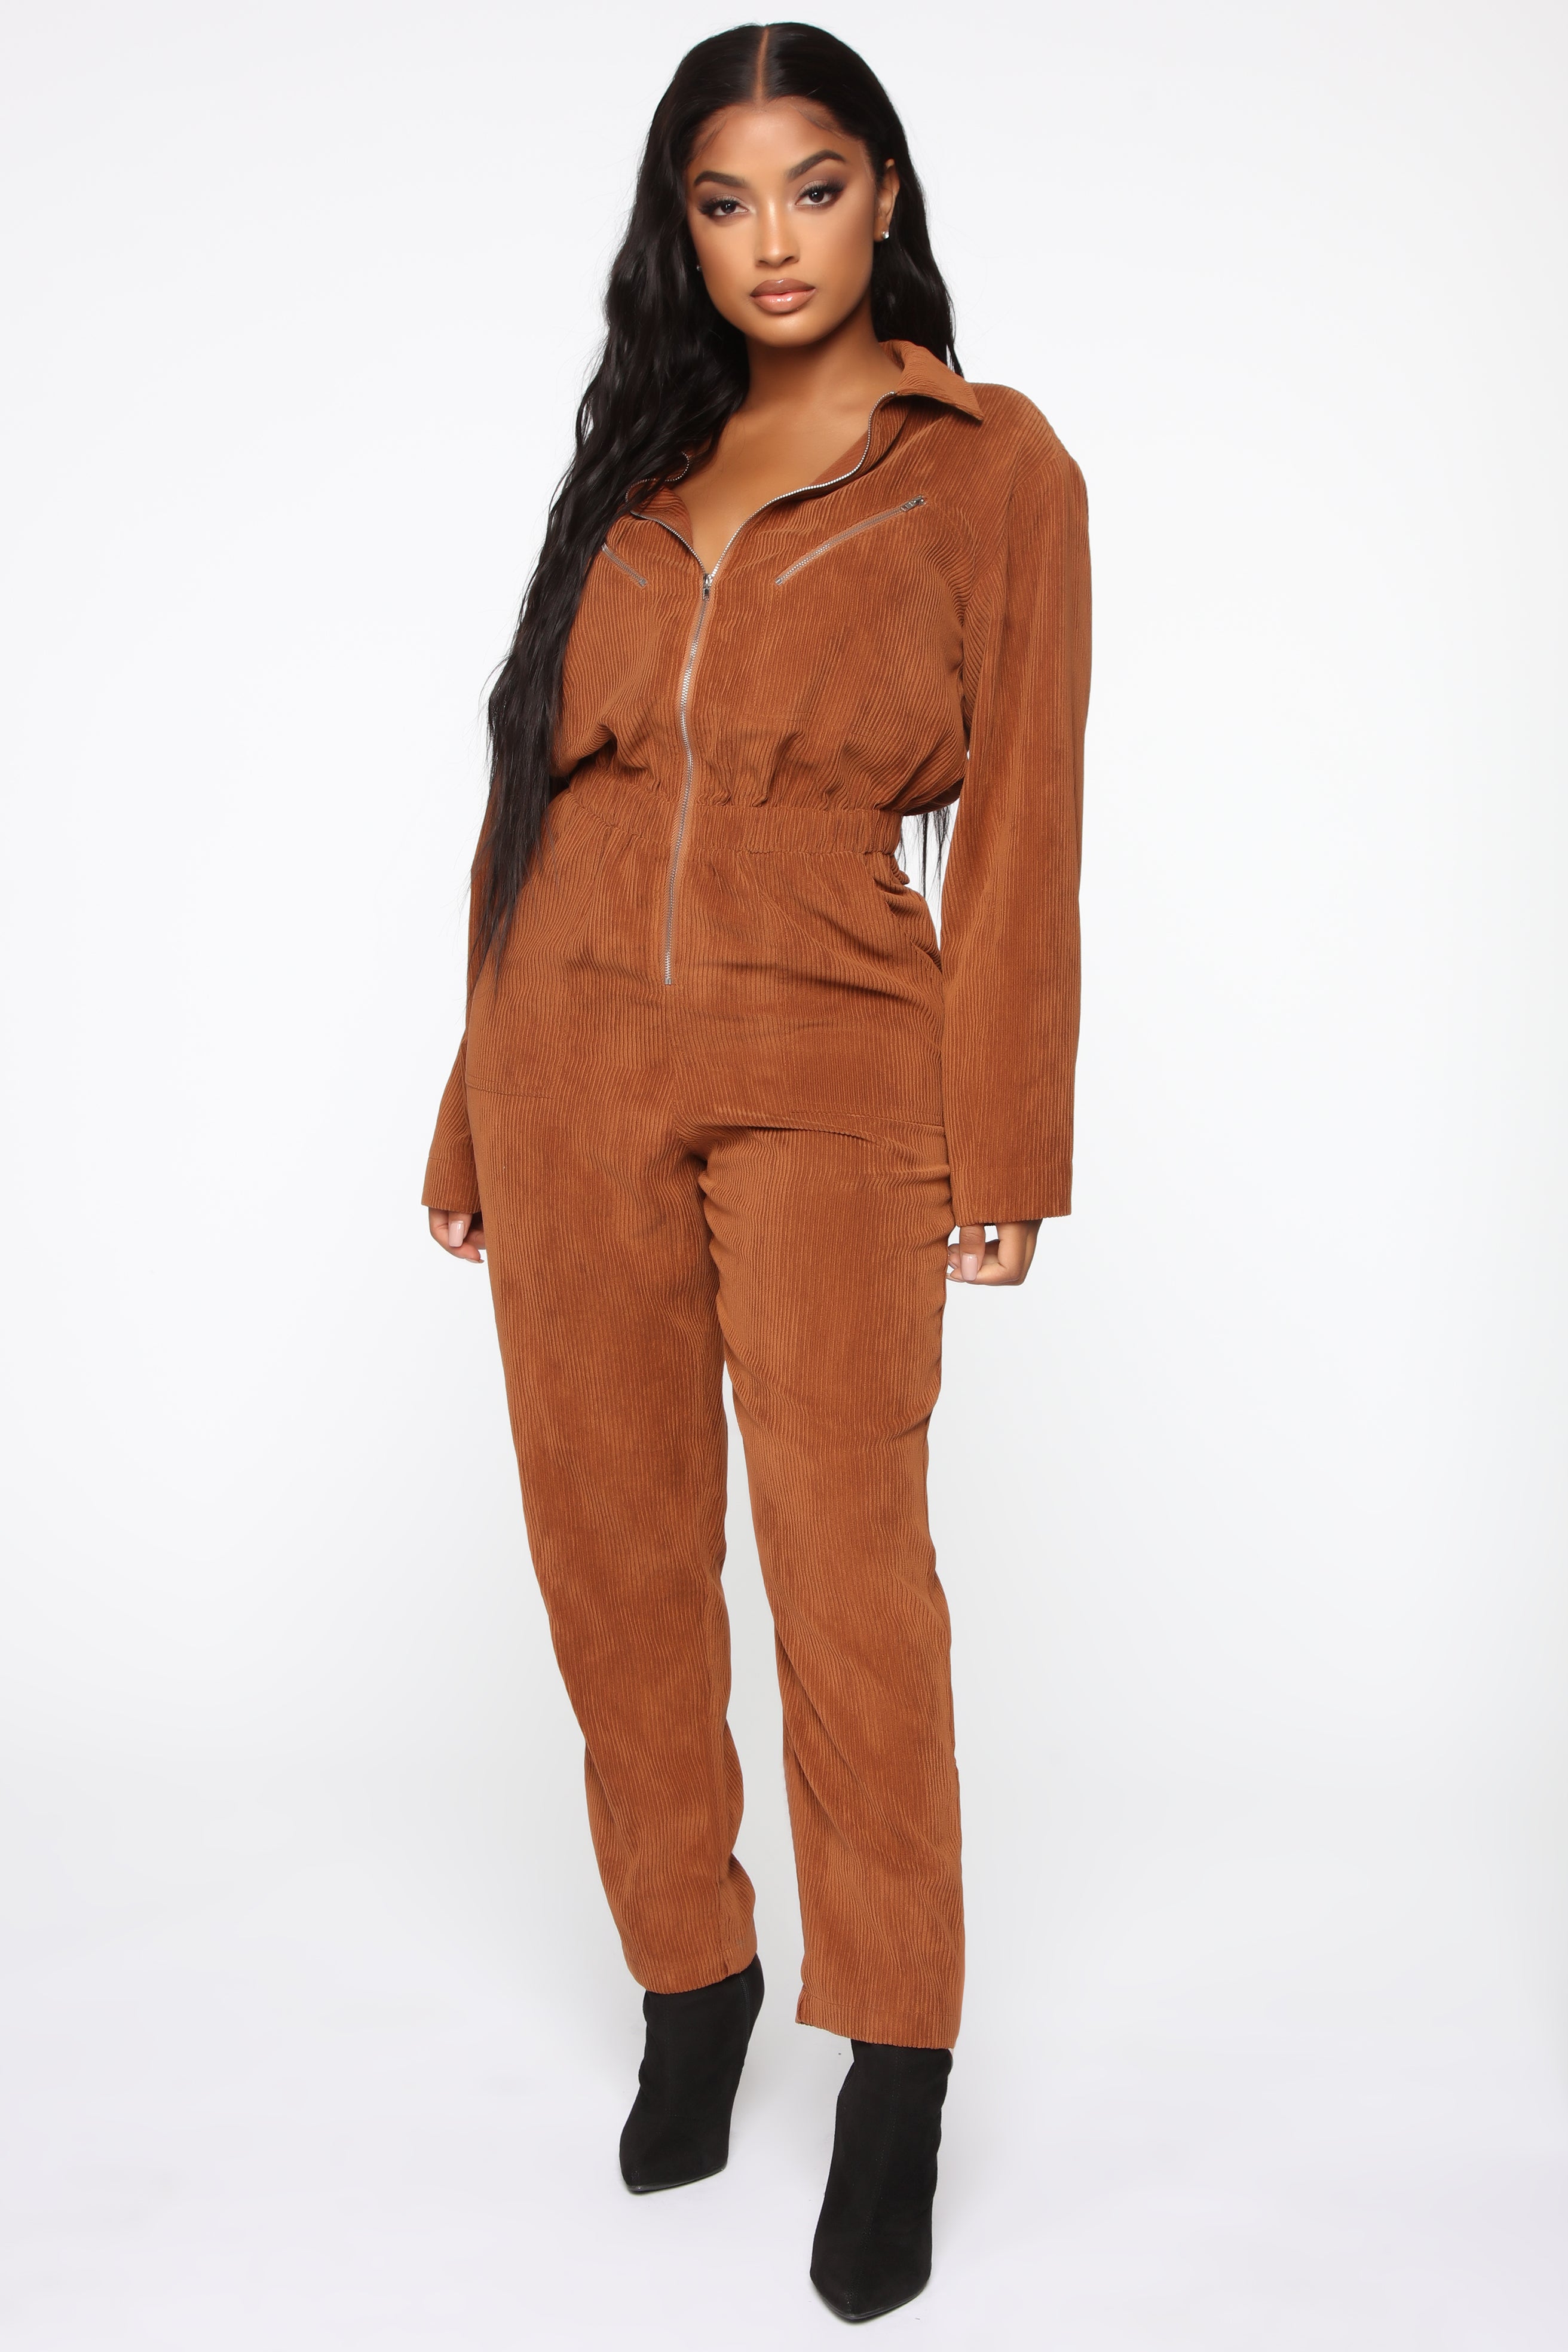 fashion nova jumpsuit brown